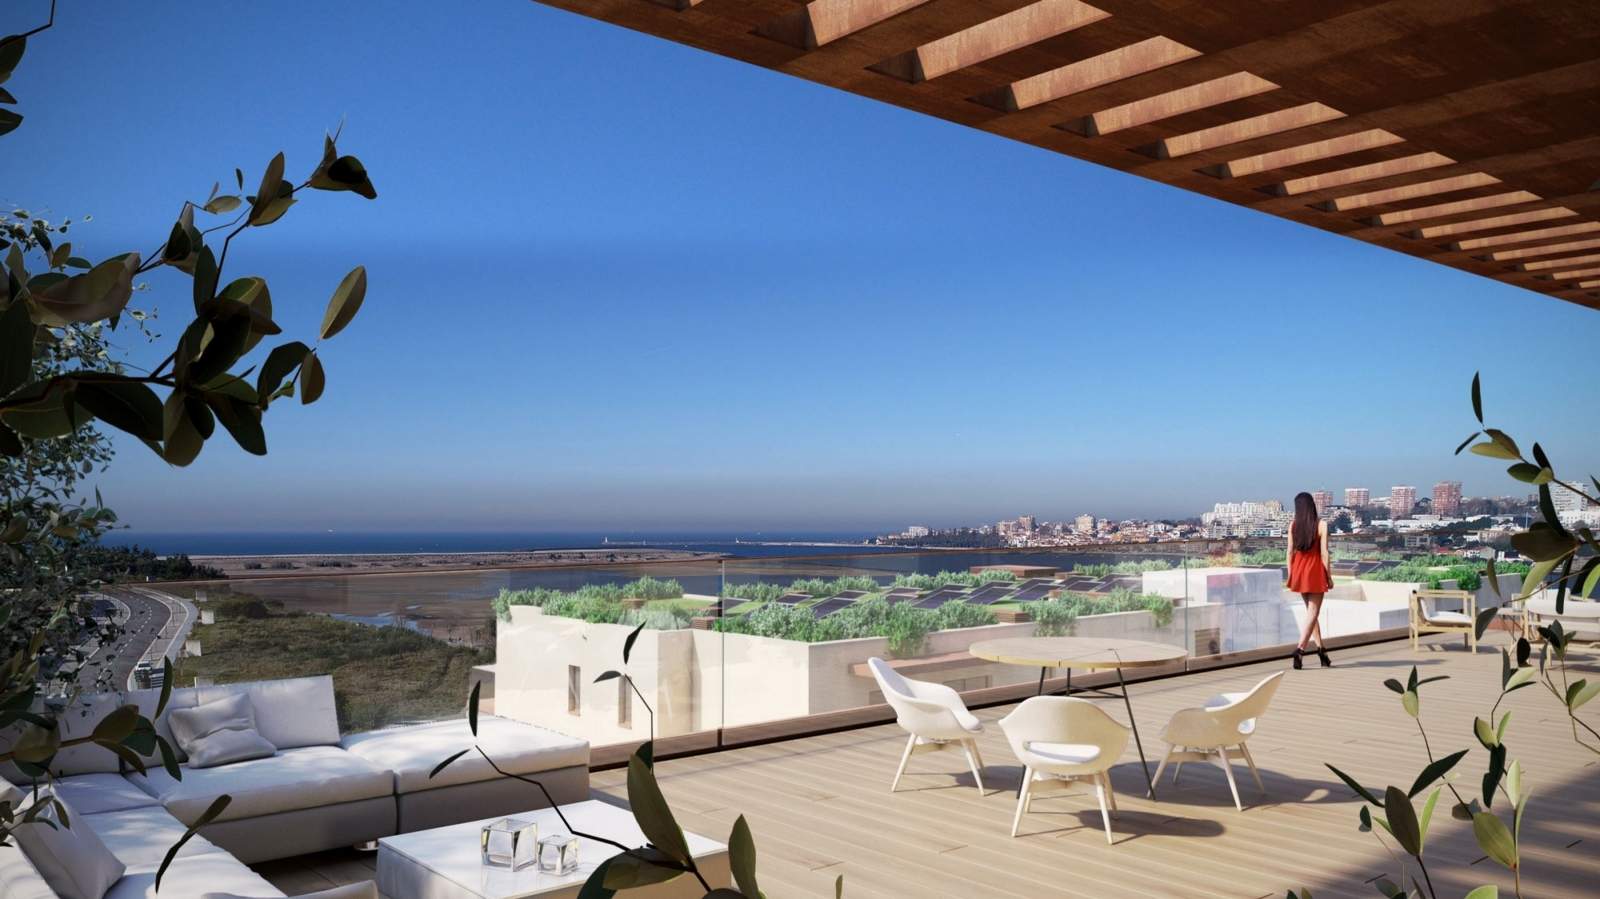 Apartment for sale with terrace, in exclusive condominium, V. N. Gaia, Porto, Portugal_175785